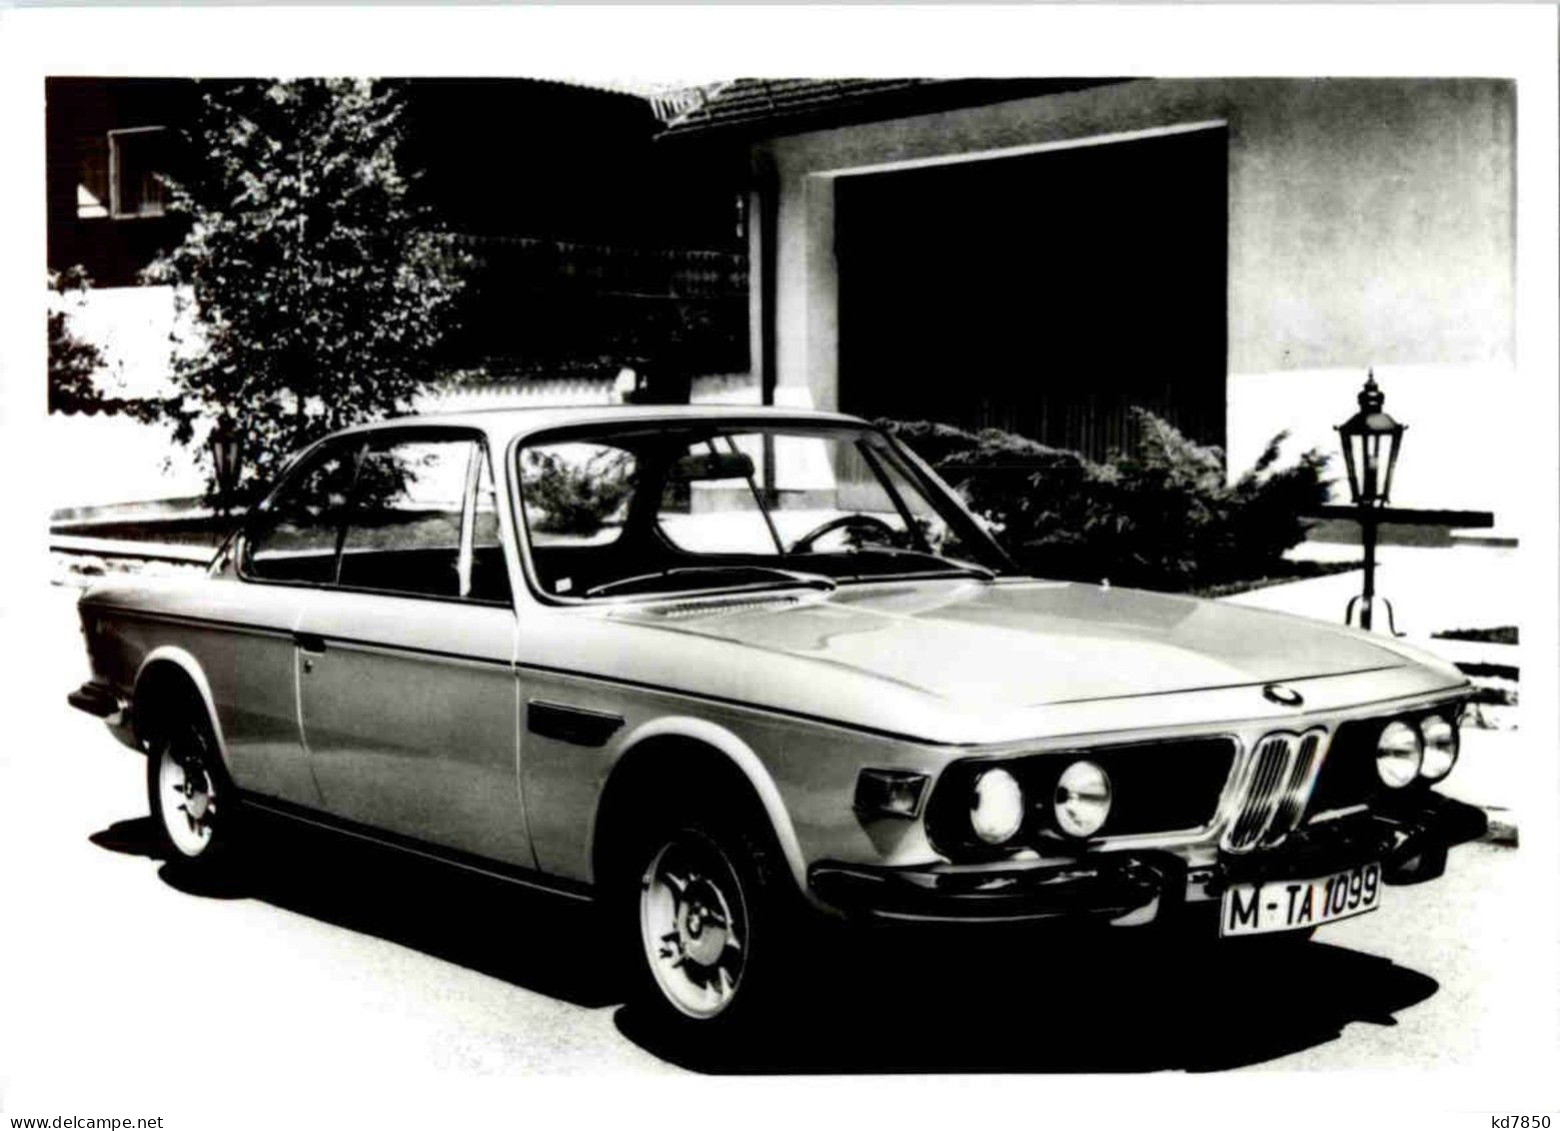 BMW 2800 - Passenger Cars